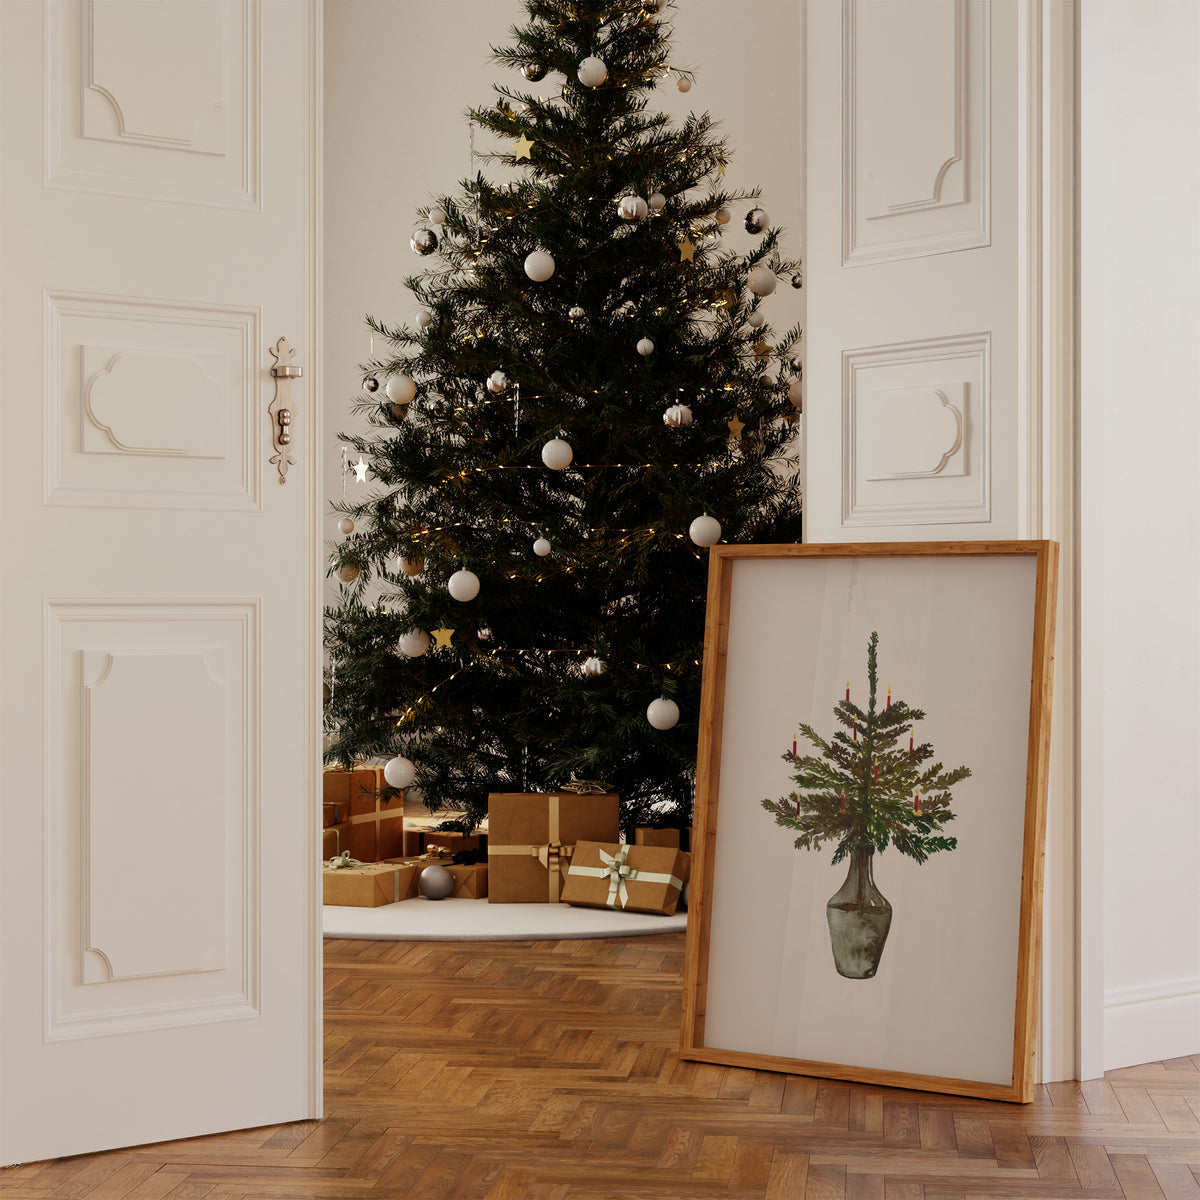 Art Print - Christmas Tree